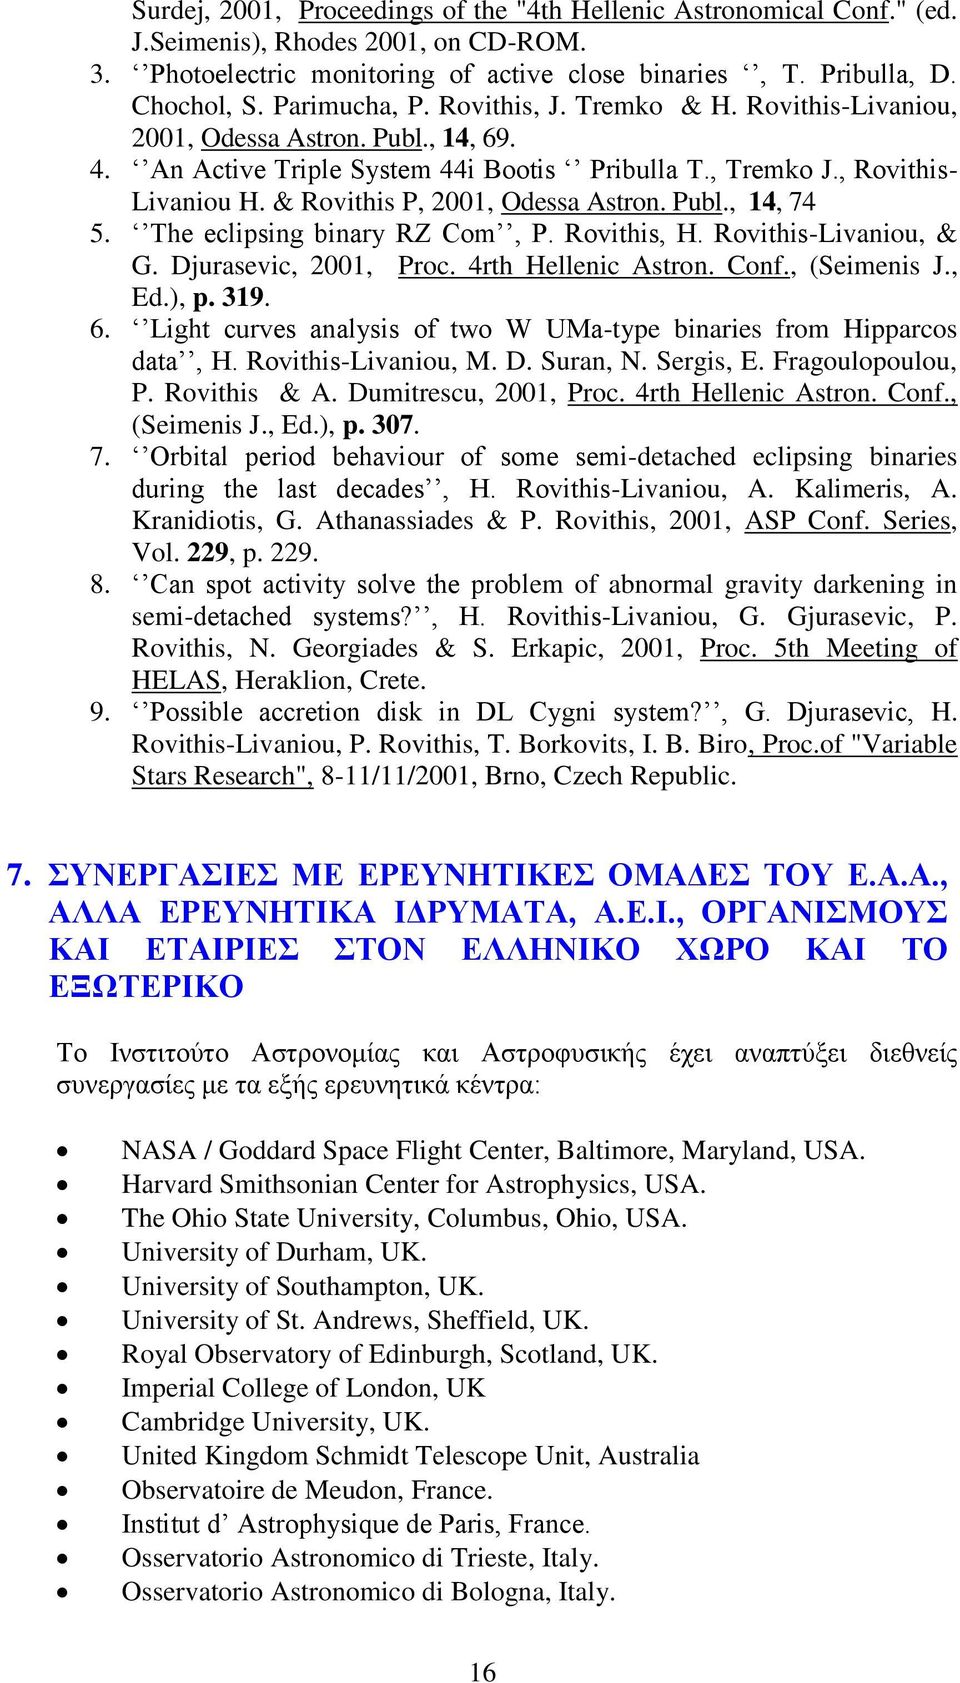 & Rovithis P, 2001, Odessa Astron. Publ., 14, 74 5. The eclipsing binary RZ Com, P. Rovithis, H. Rovithis-Livaniou, & G. Djurasevic, 2001, Proc. 4rth Hellenic Astron. Conf., (Seimenis J., Ed.), p.